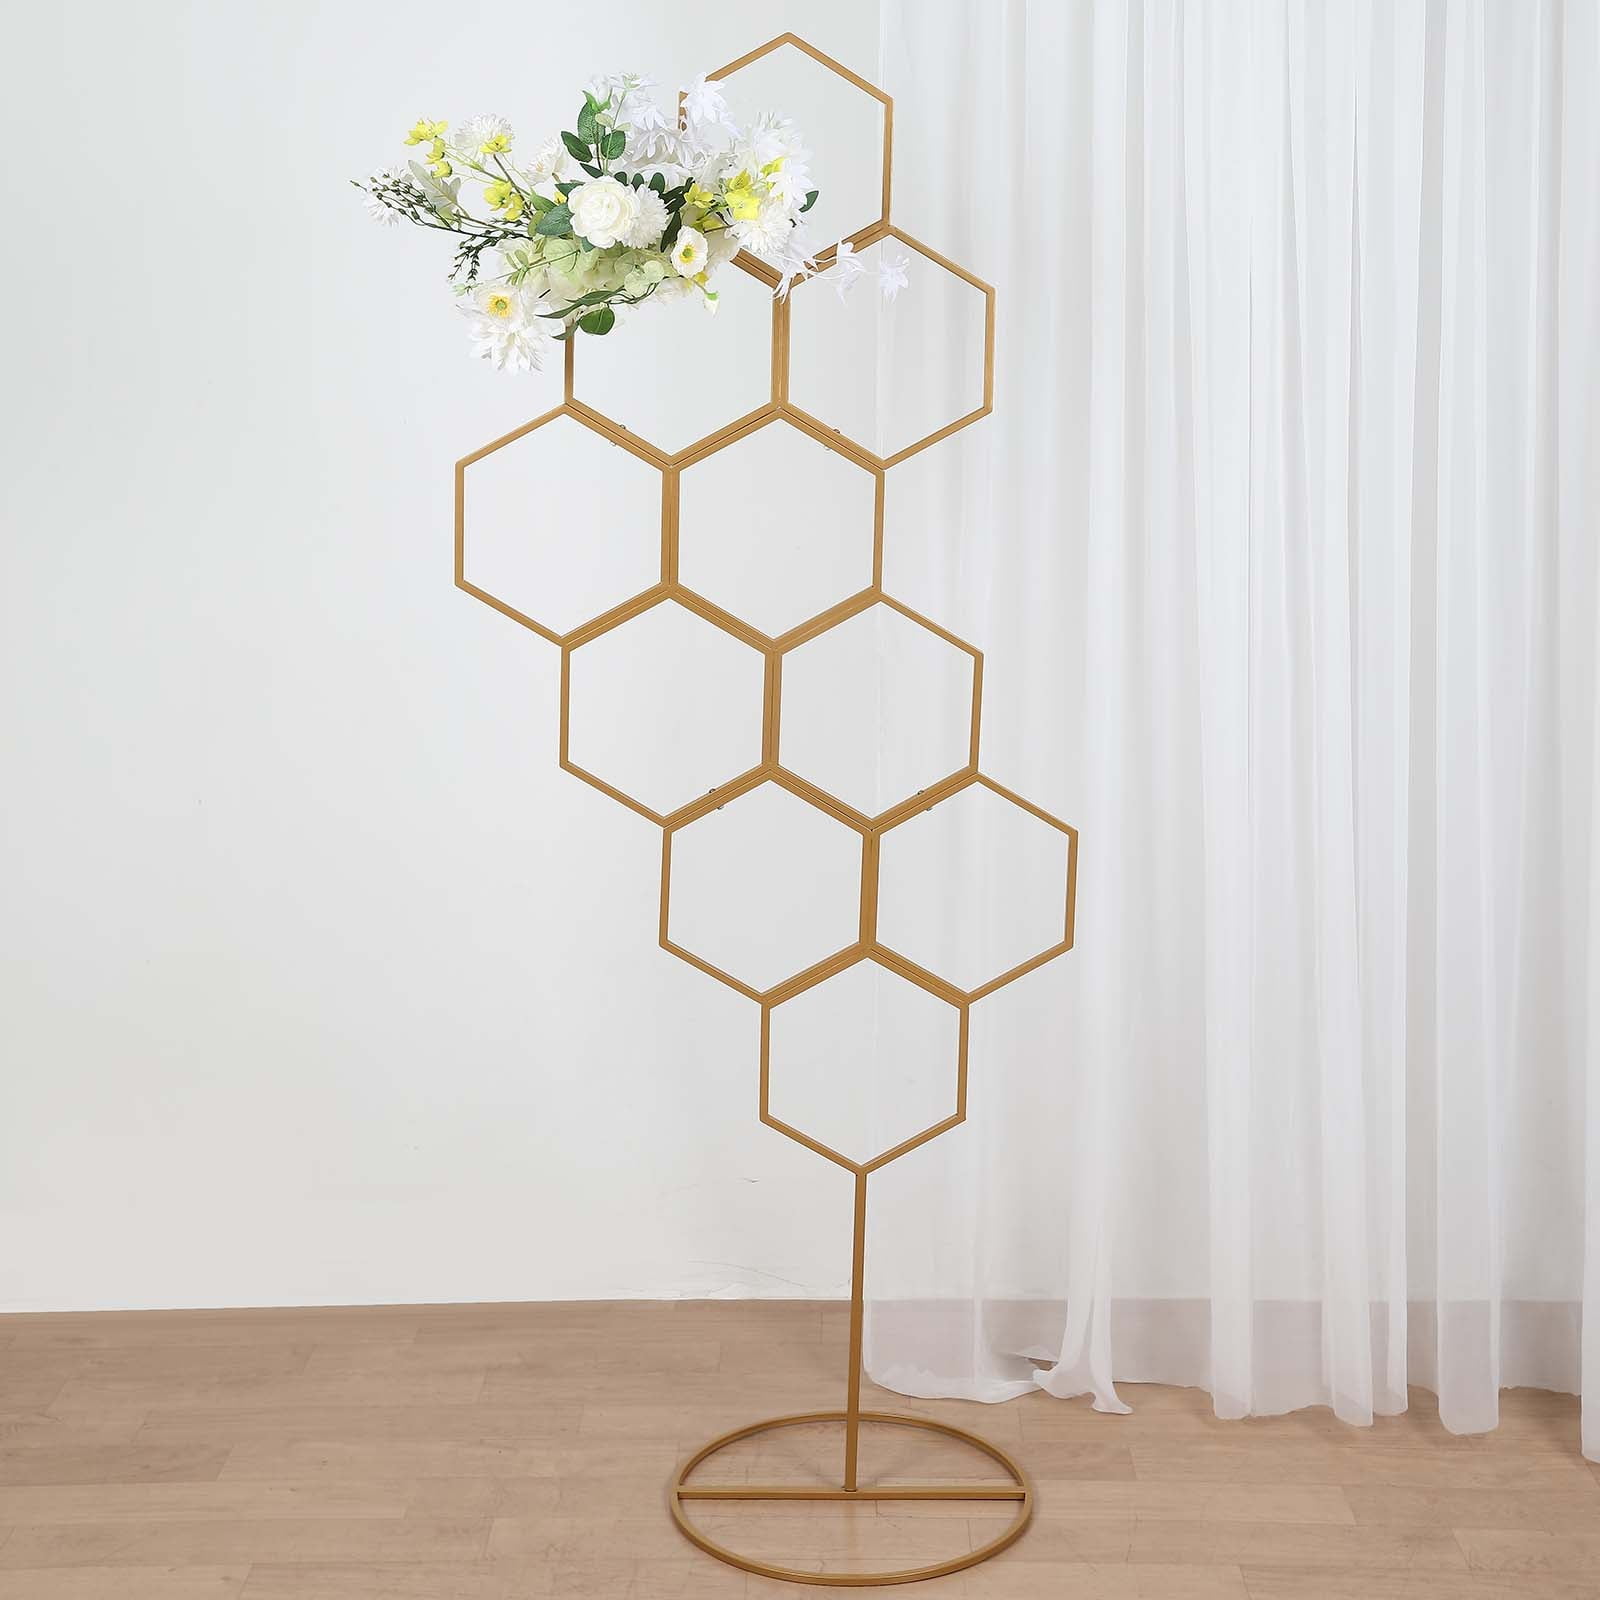 4ft Gold Balloon Column With Hoop Flower Pillar Stand, Metal Arch Table  Centerpiece Height Adjustable 